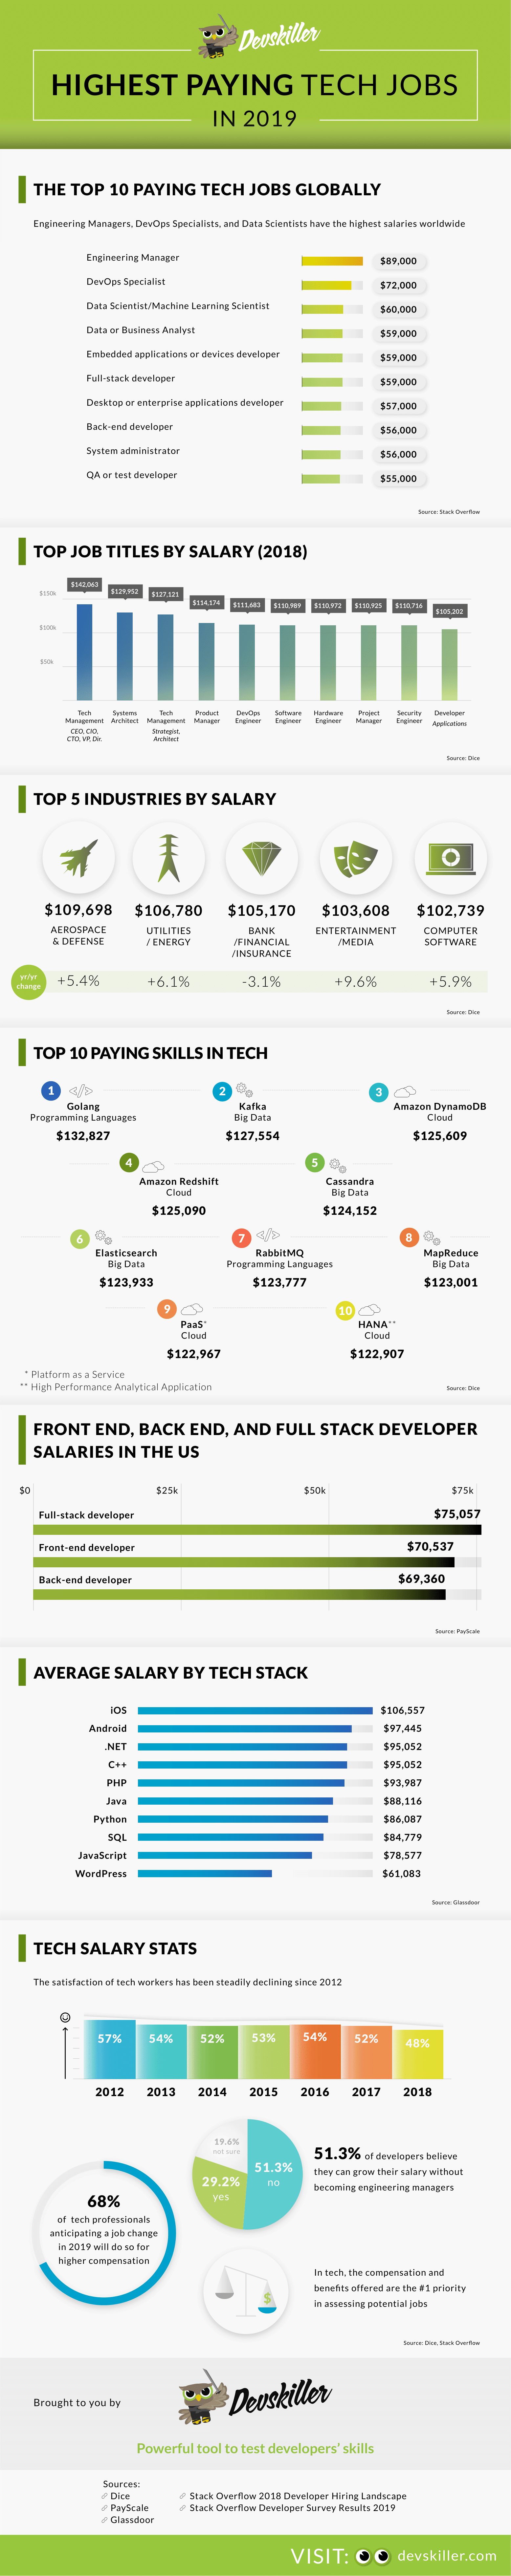 Hoogst betaalde tech banen